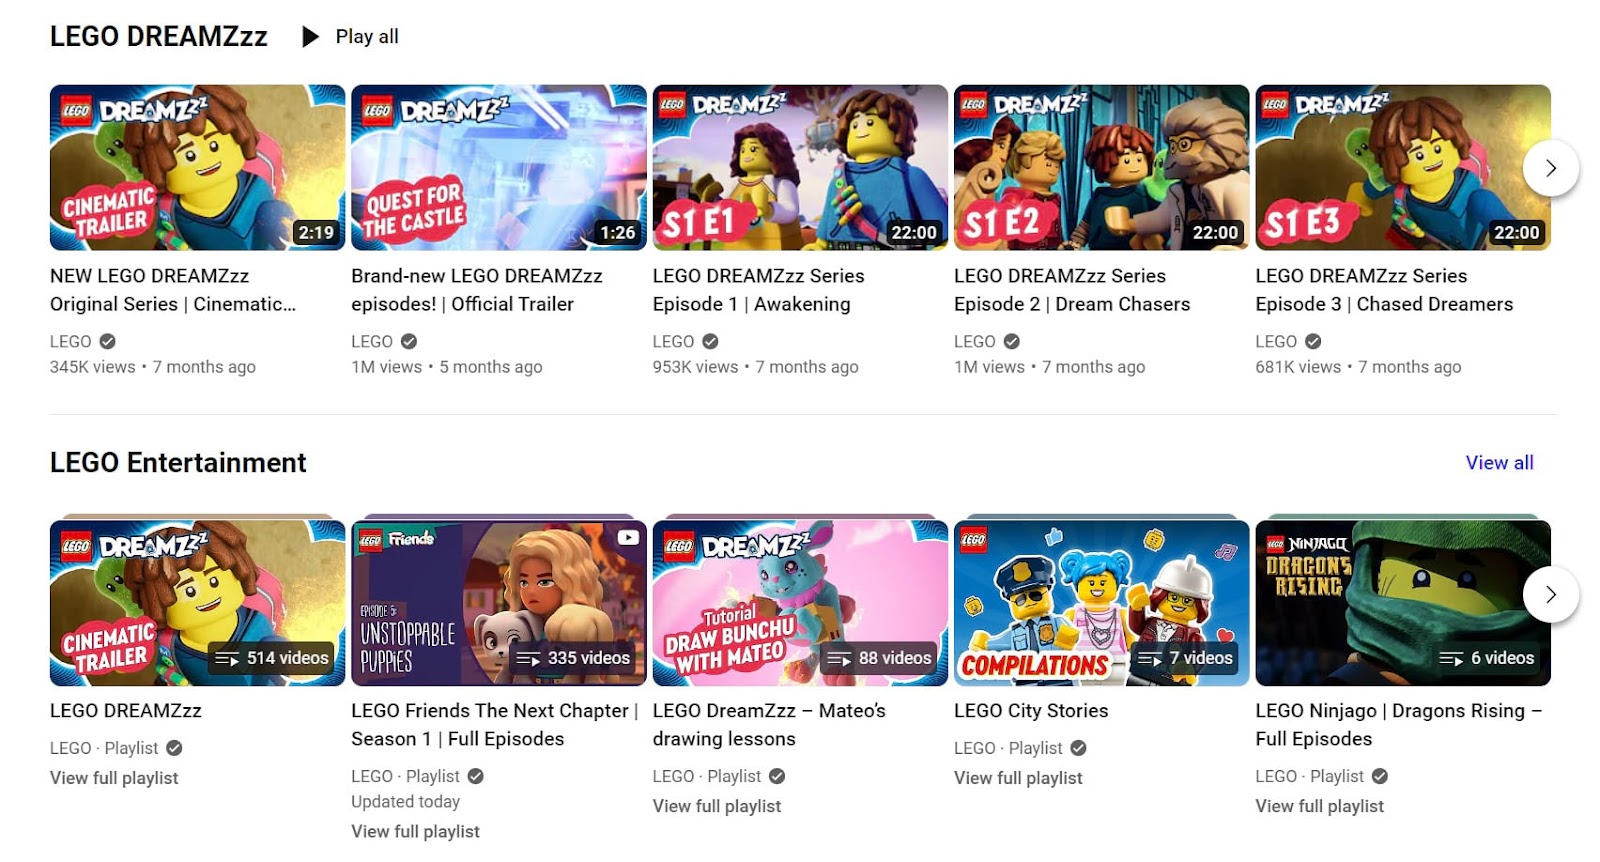 LEGO's video content